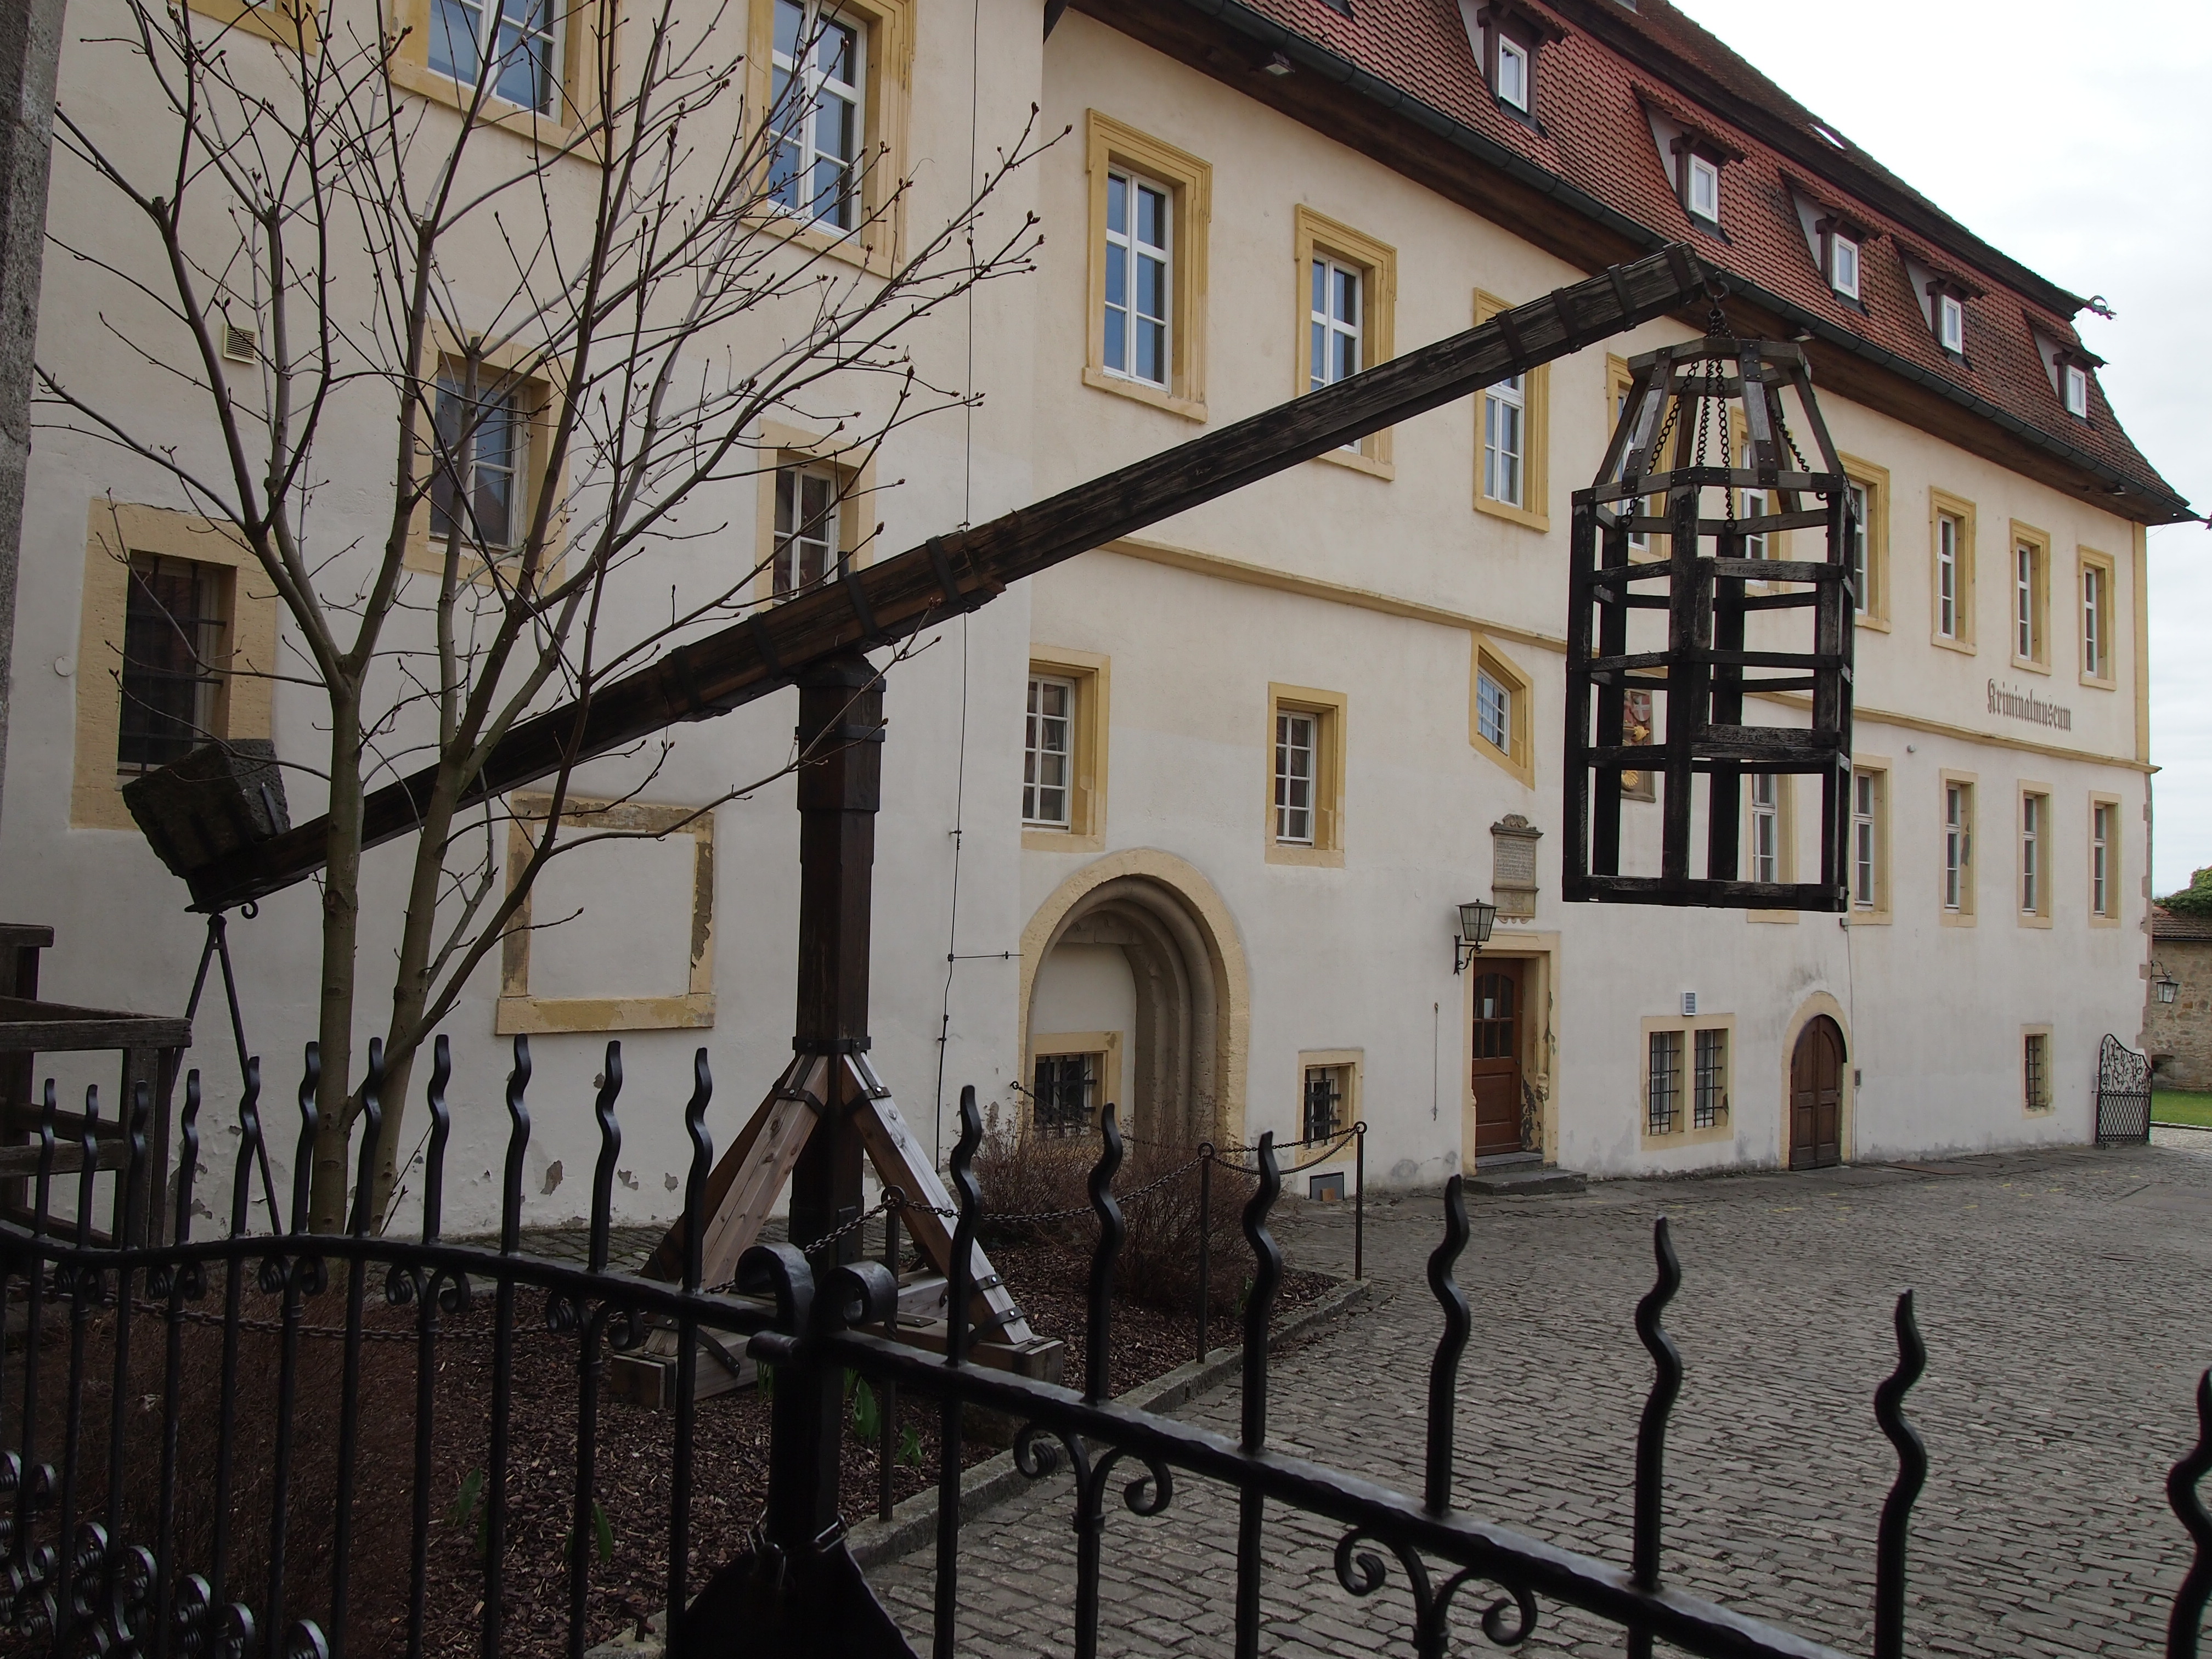 The medieval criminal museum, rothenburg photo